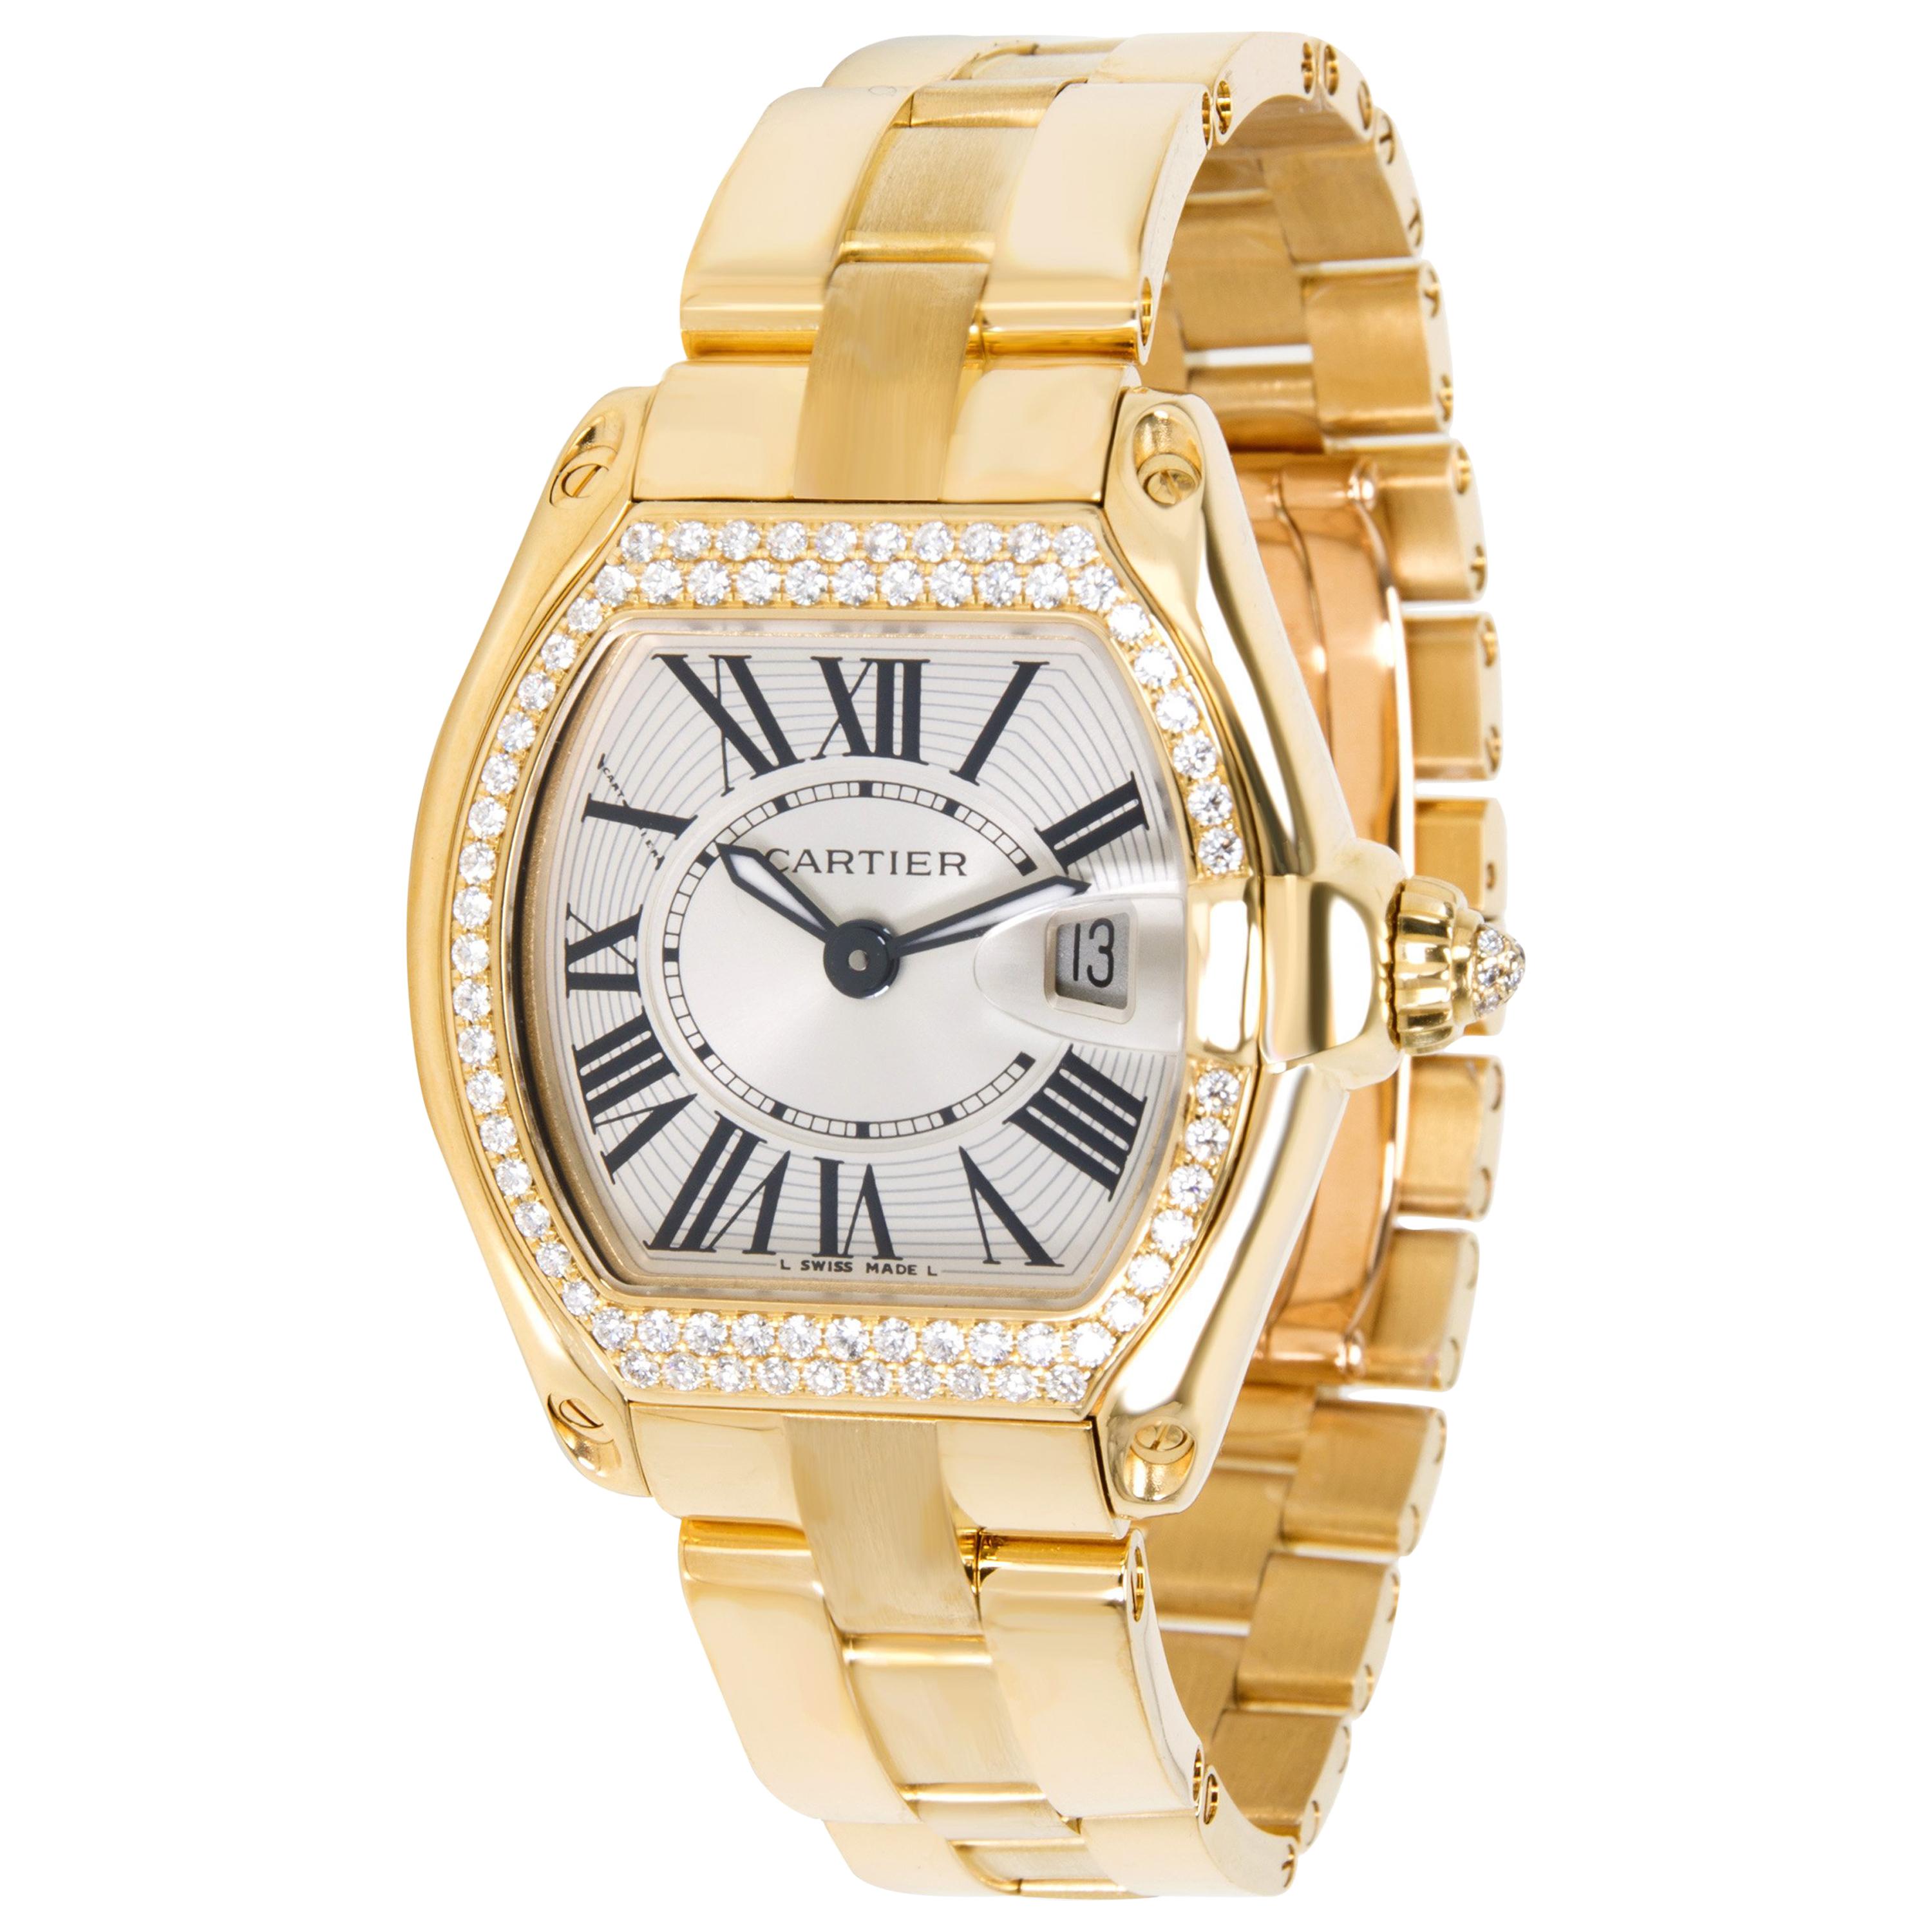 Cartier Roadster WE5001X1 Women's Watch in 18 Karat Yellow Gold